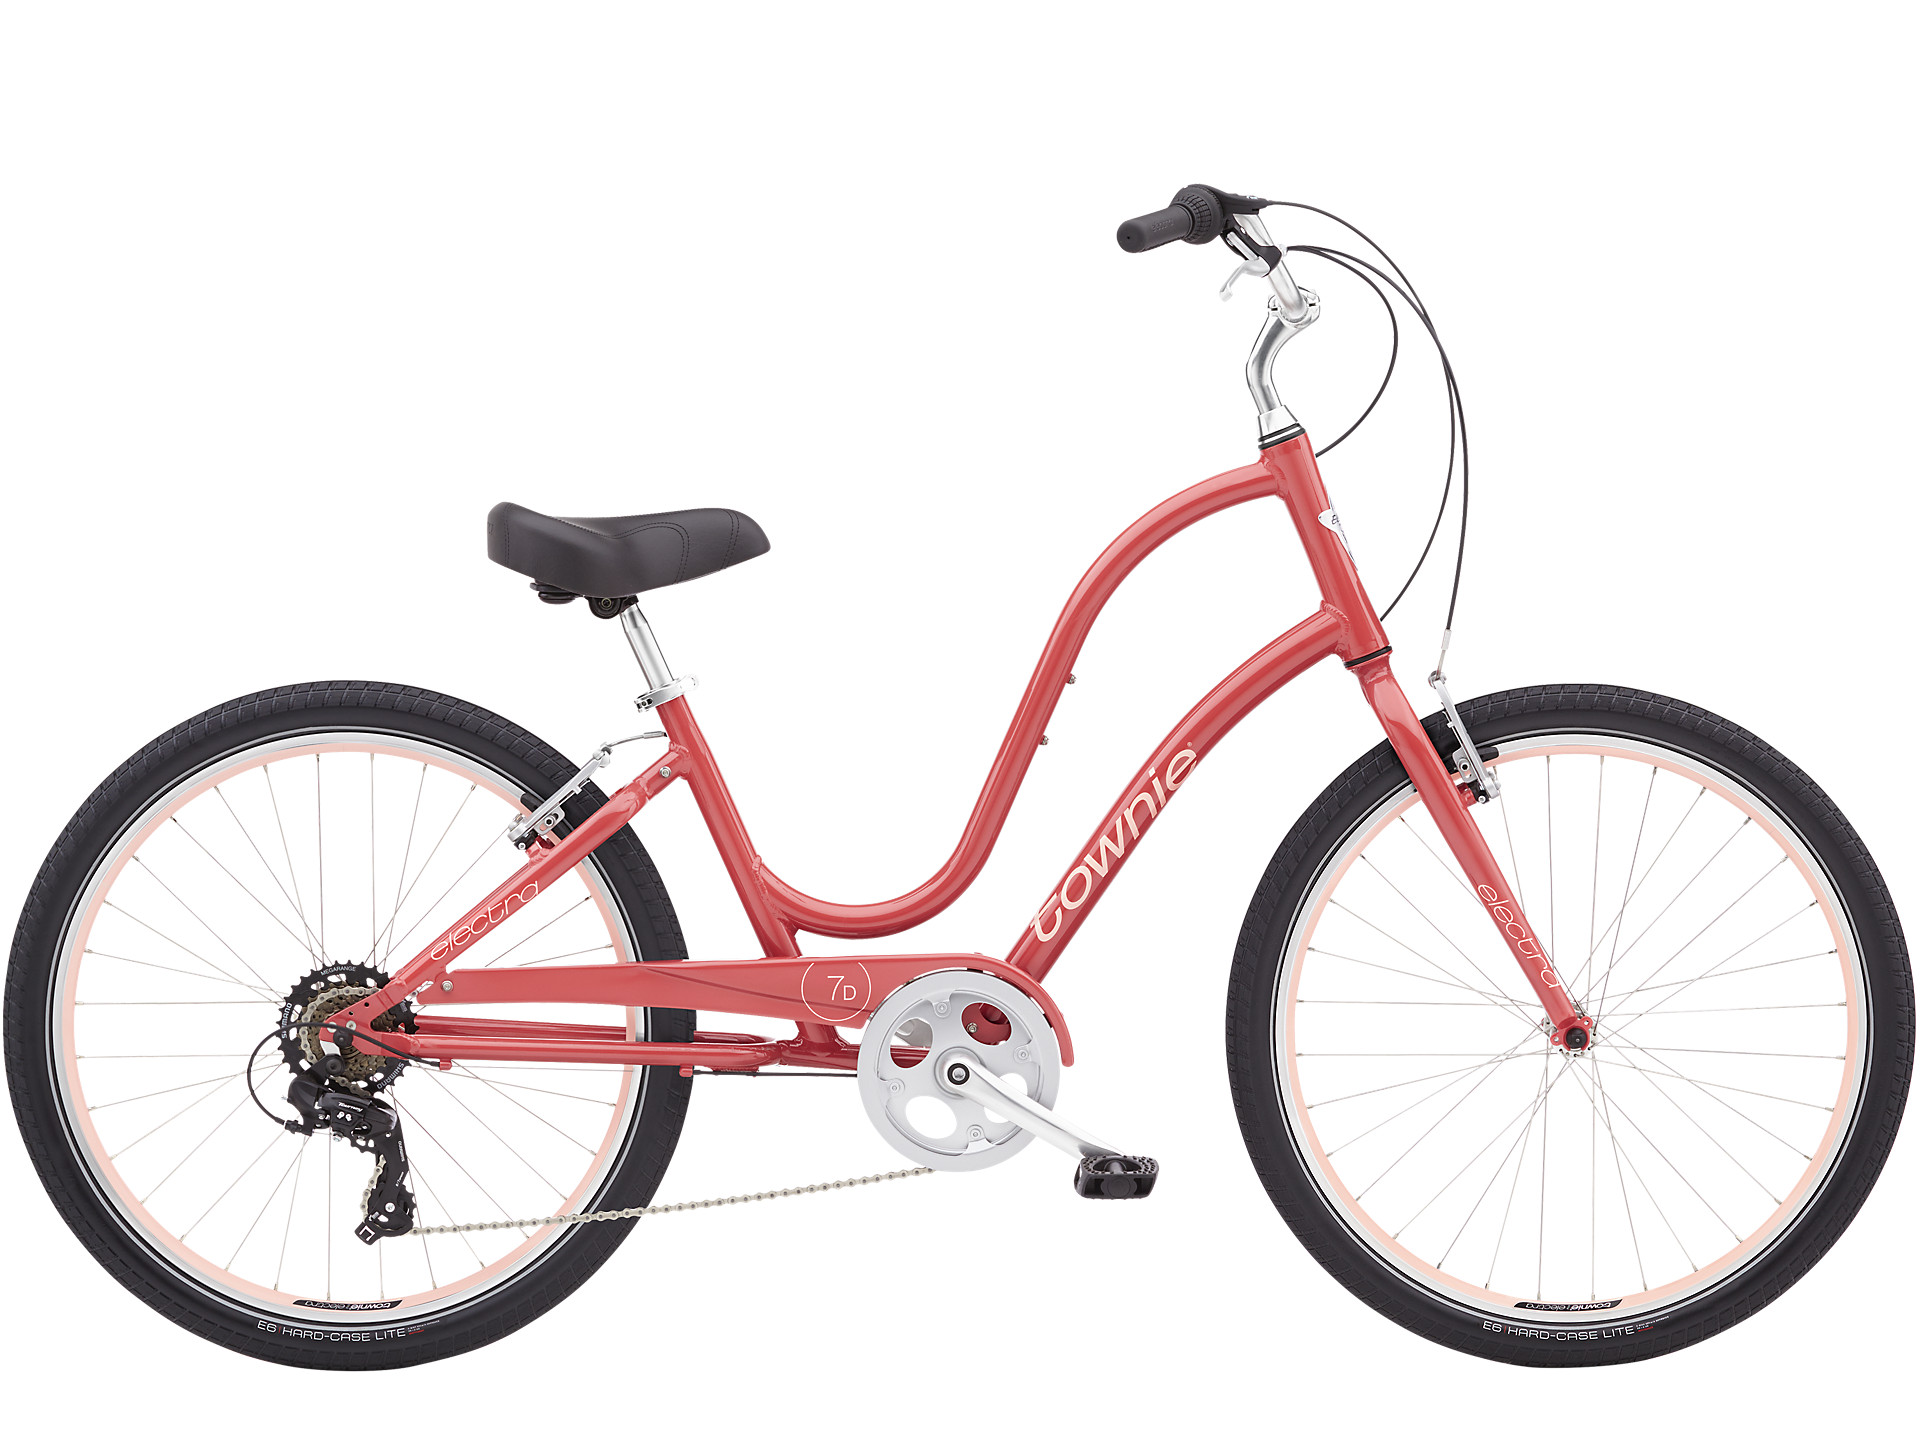 Red Townie Original 7D step-through comfort bike with rim brakes